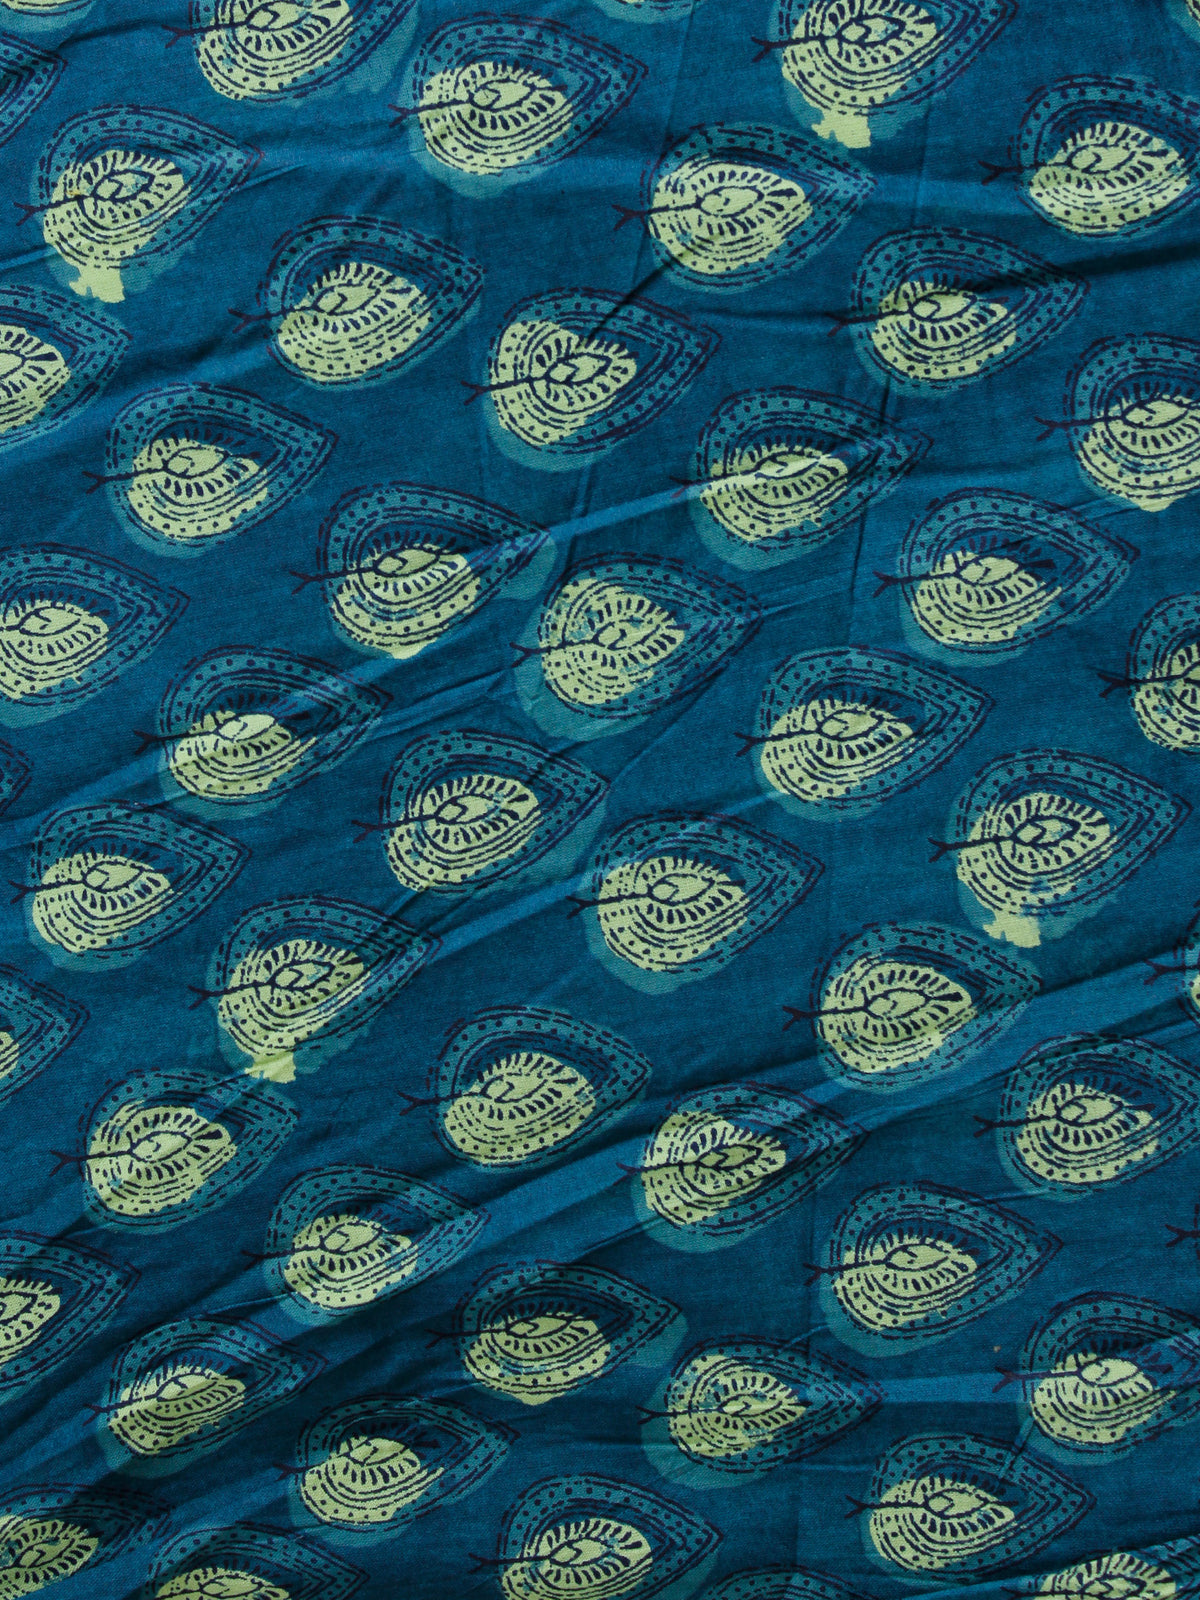 Indigo Green Hand Block Printed Cotton Fabric Per Meter - F001F1865